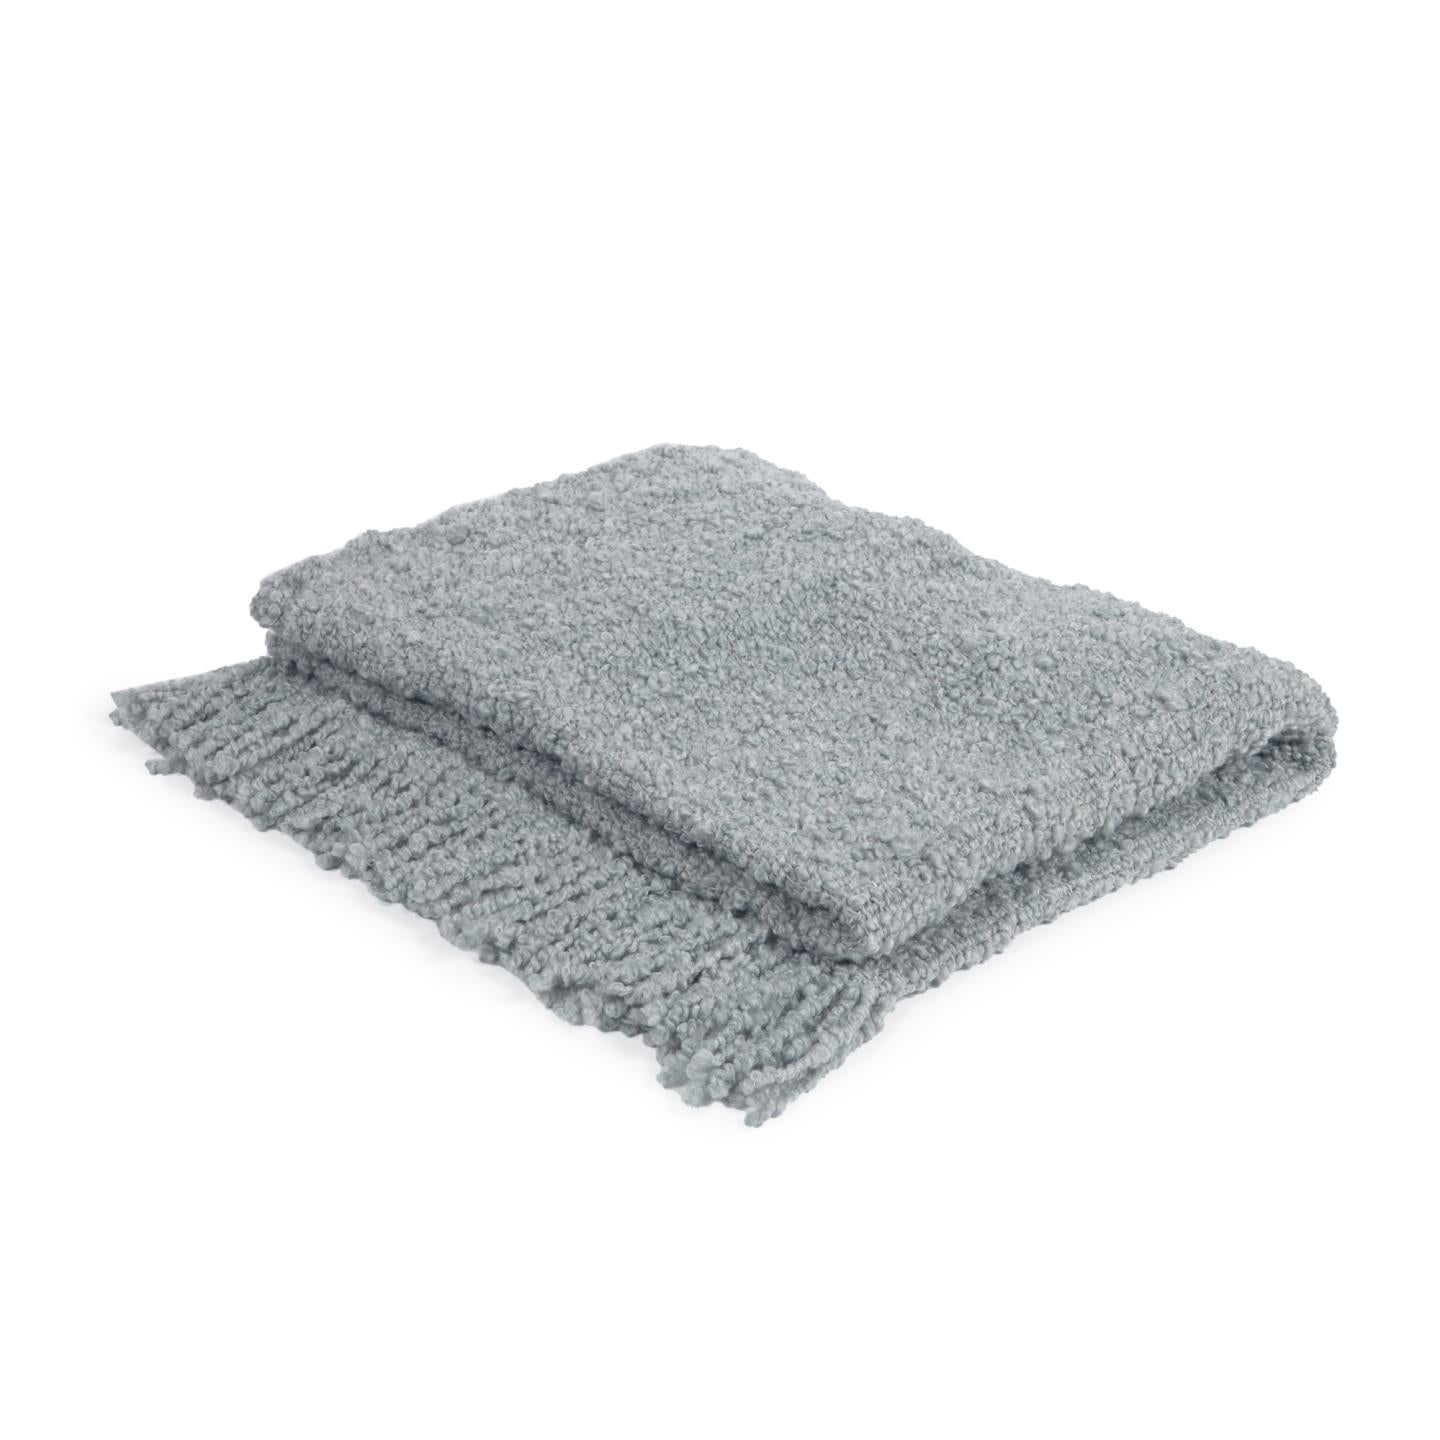 Corel grey blanket 125 x 150 cm